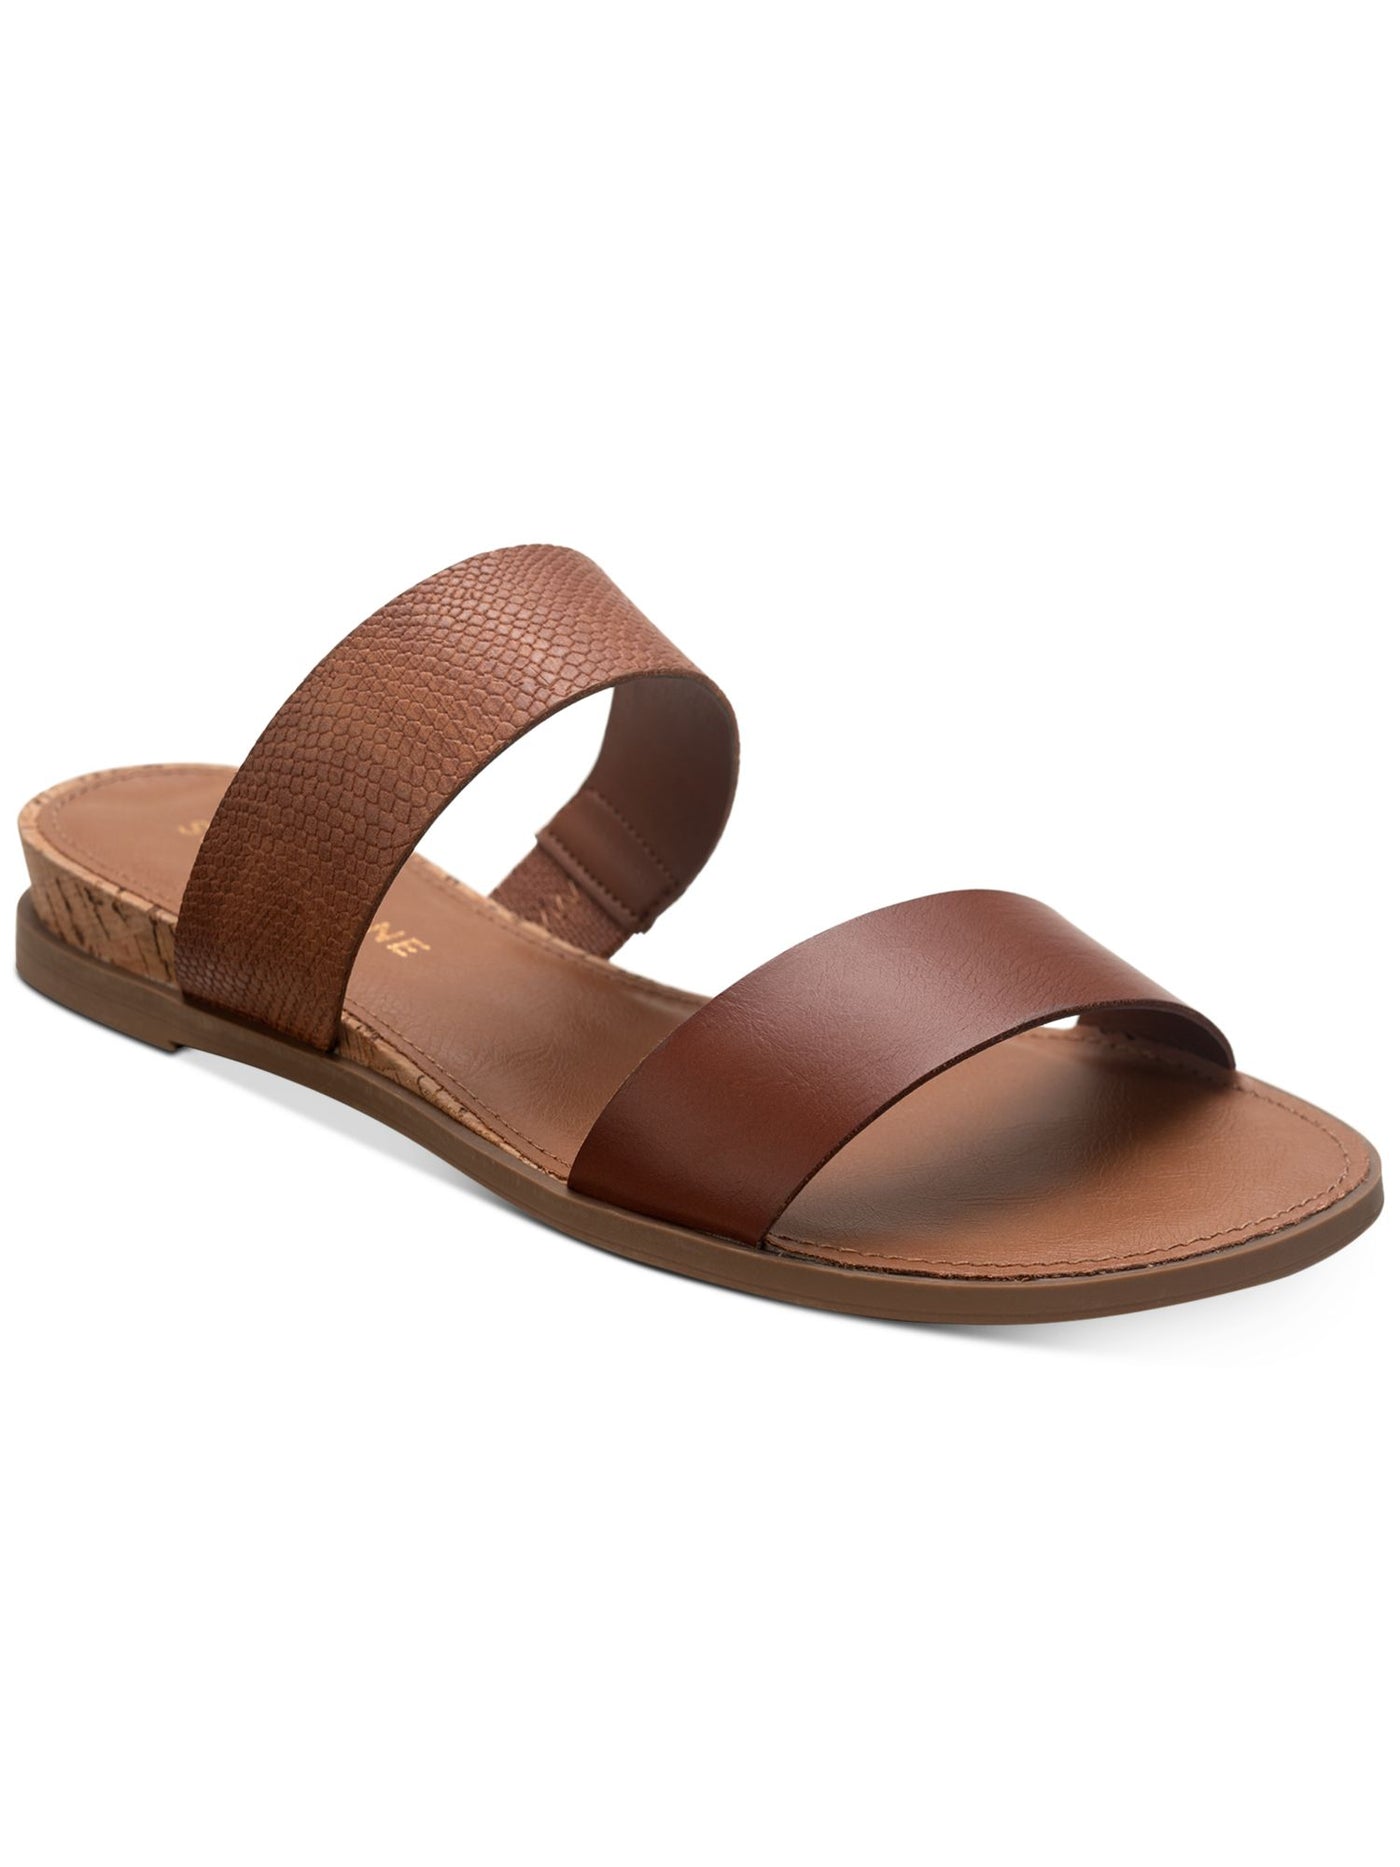 SUN STONE Womens Brown Snakeskin Slip Resistant Cushioned Easten Round Toe Wedge Slip On Slide Sandals Shoes 7.5 W